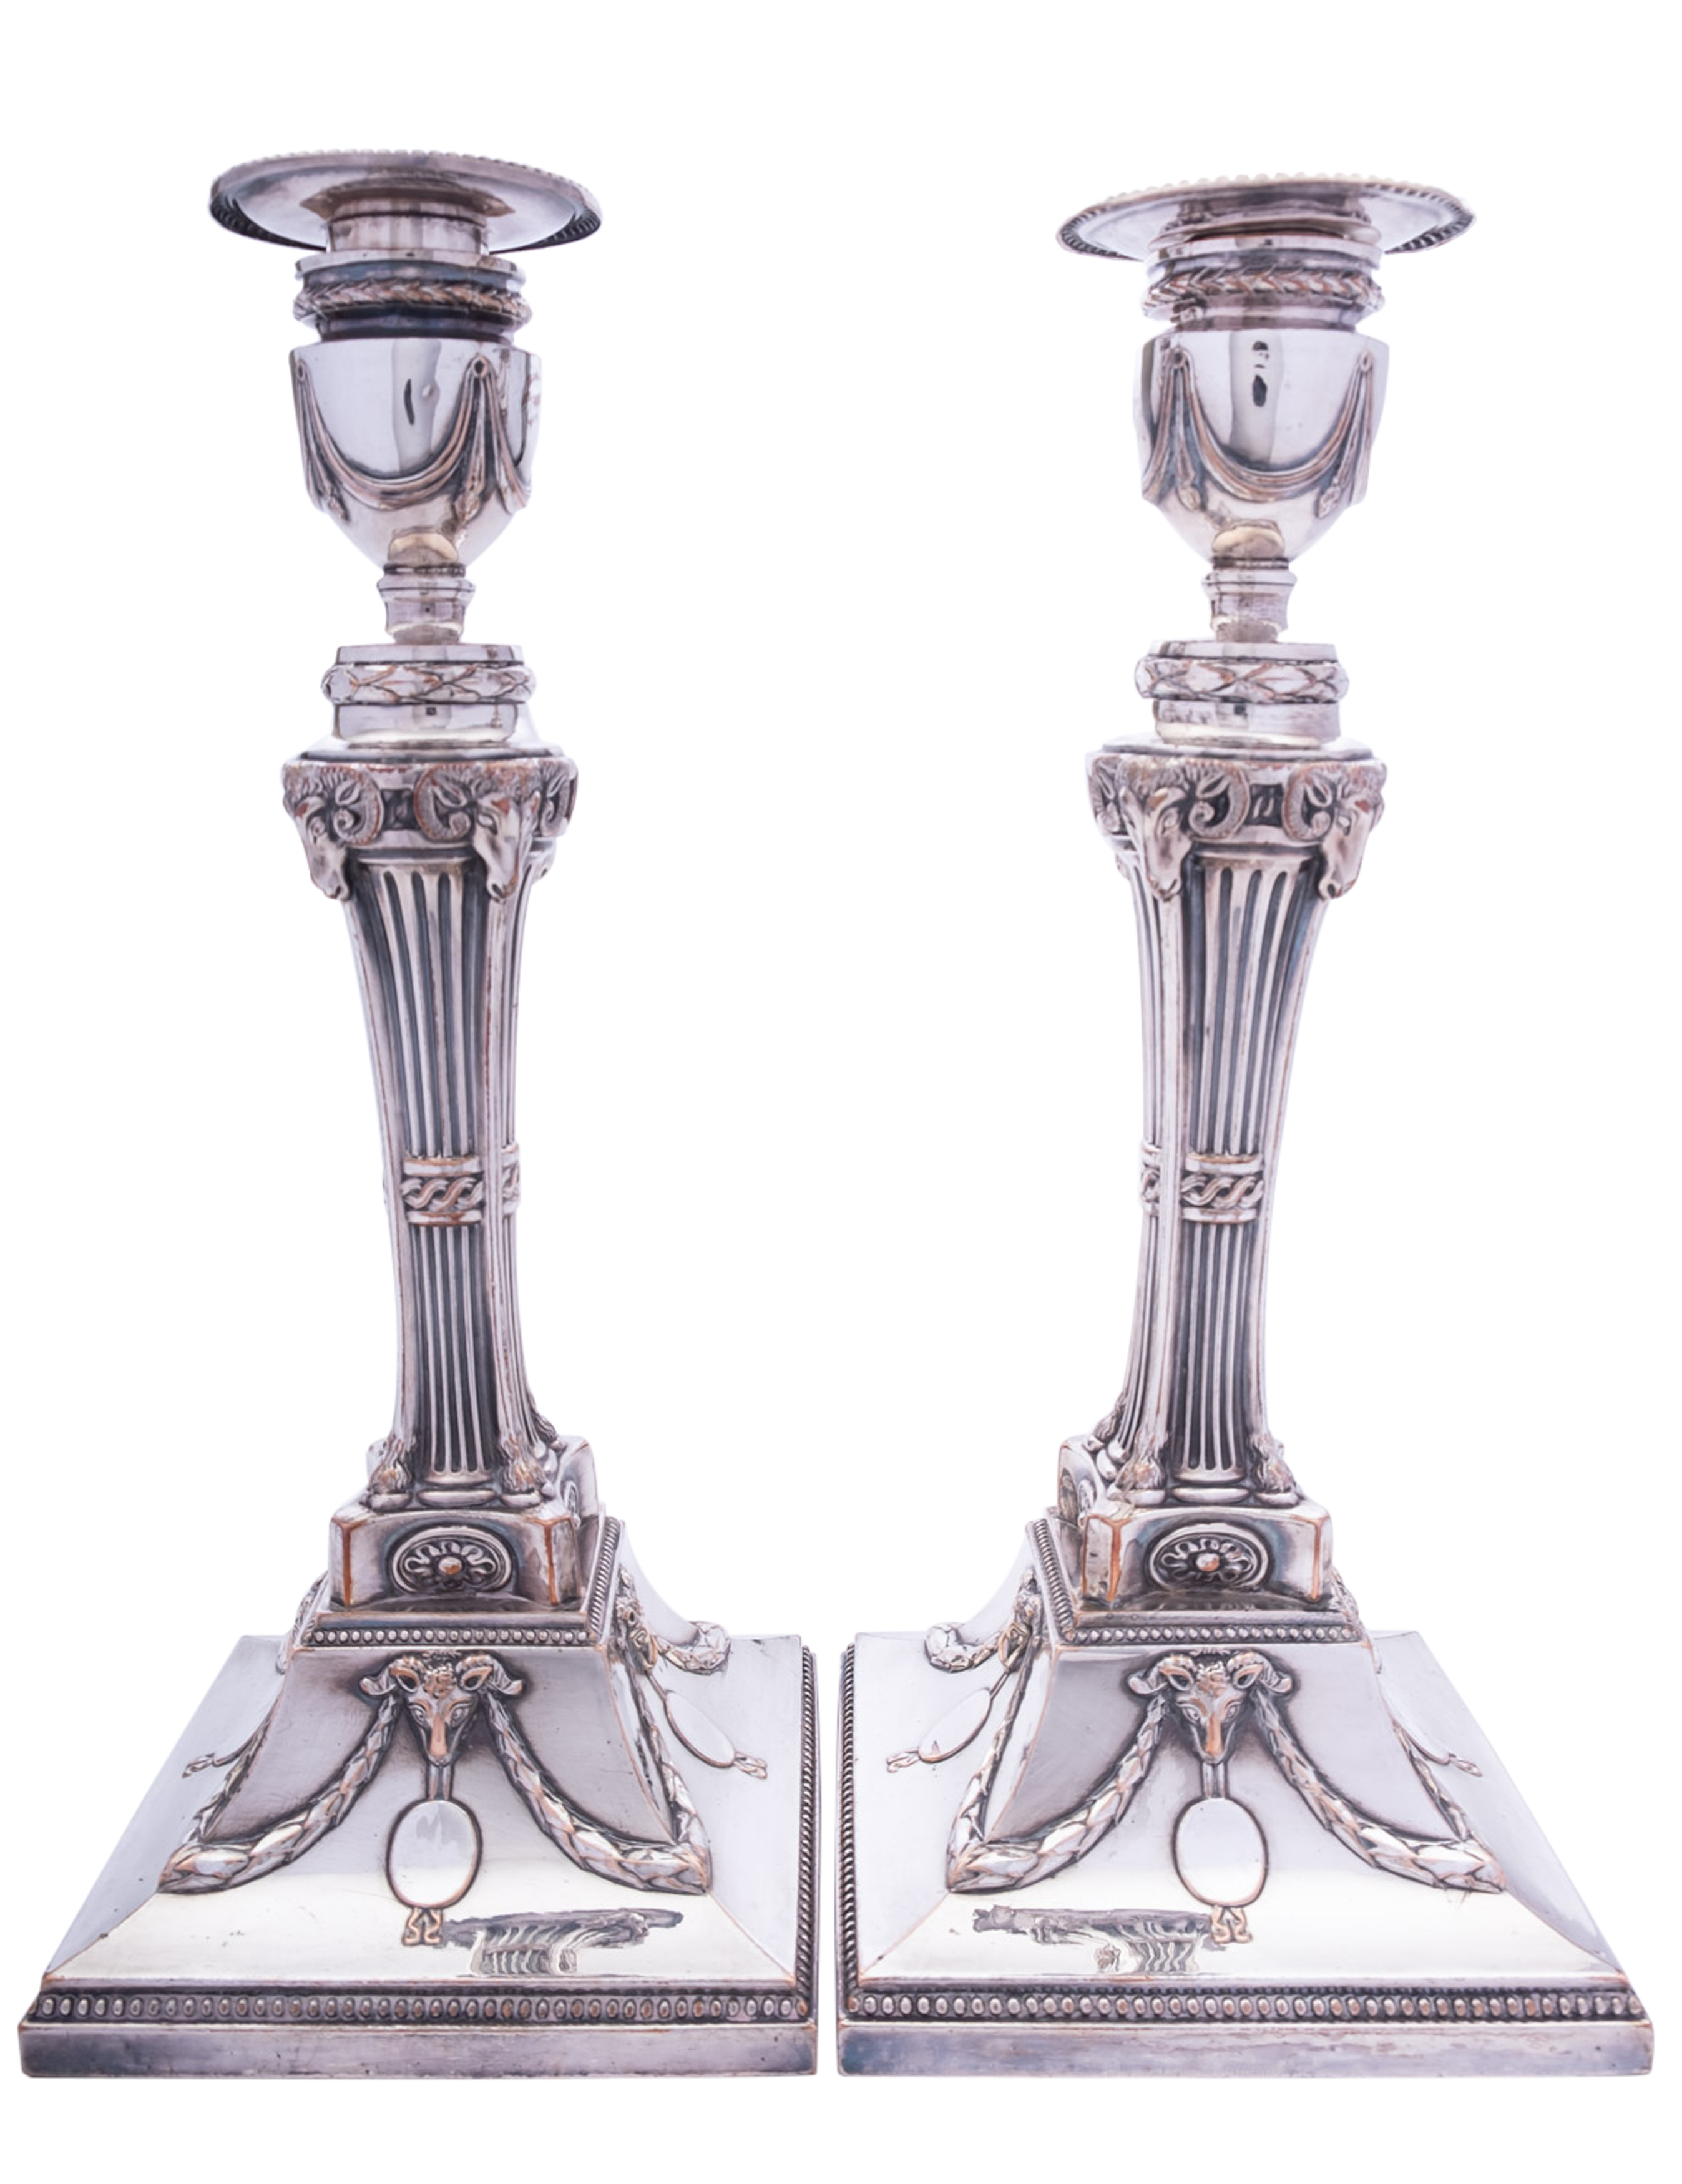 A pair of Sheffield Plated candlesticks of Robert Adam design, with ram's head motifs, 29. - Image 3 of 3